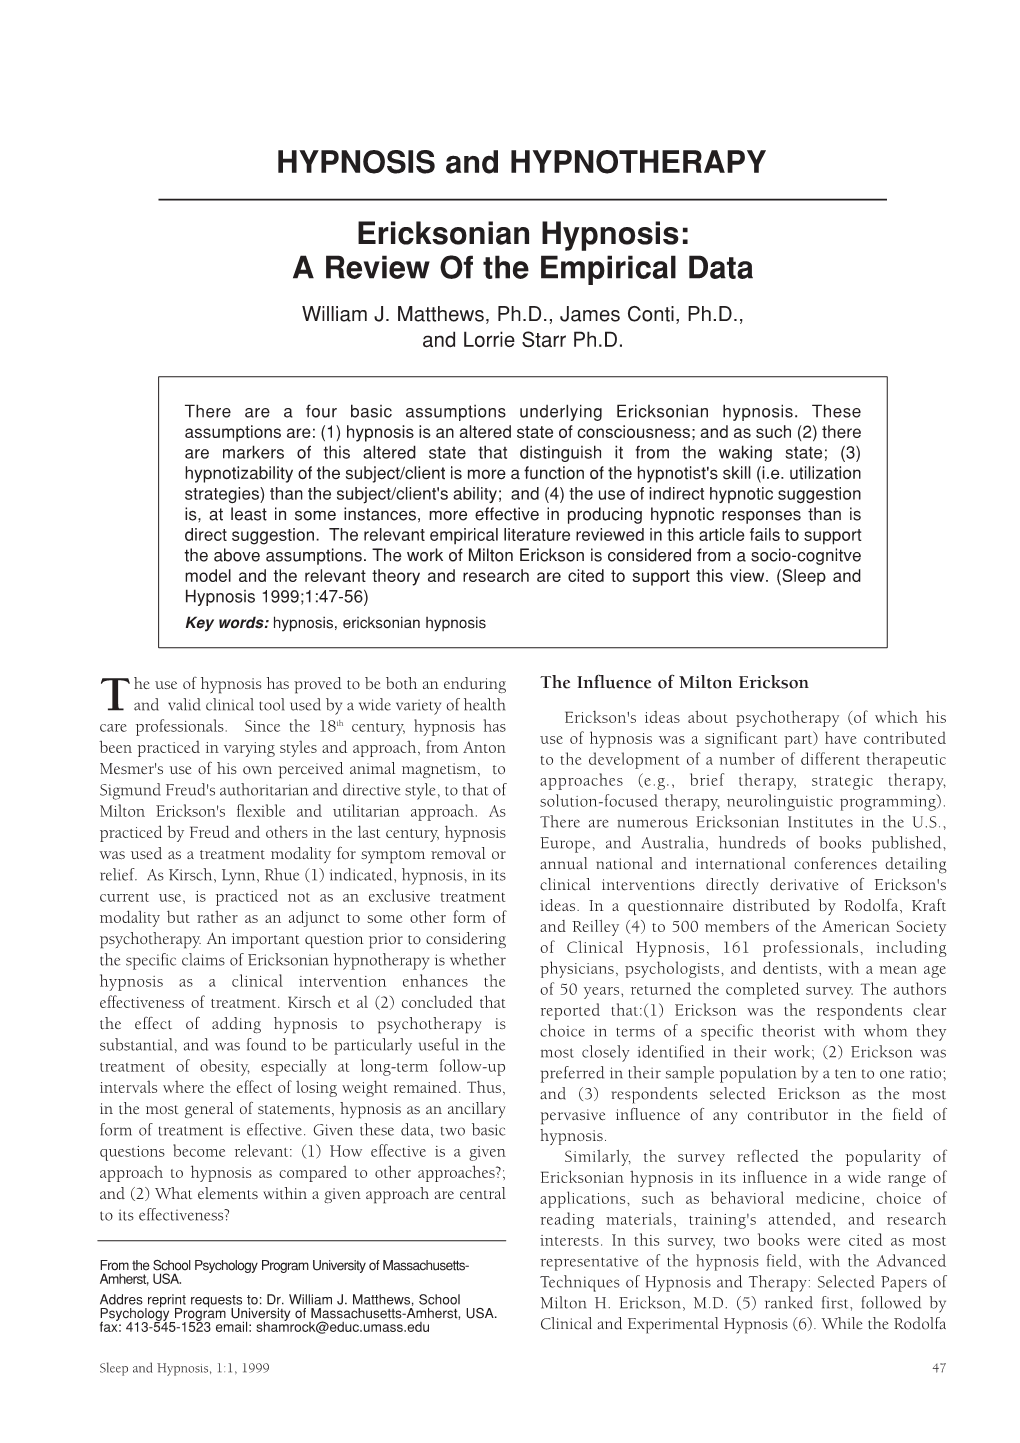 Ericksonian Hypnosis: a Review of the Empirical Data William J